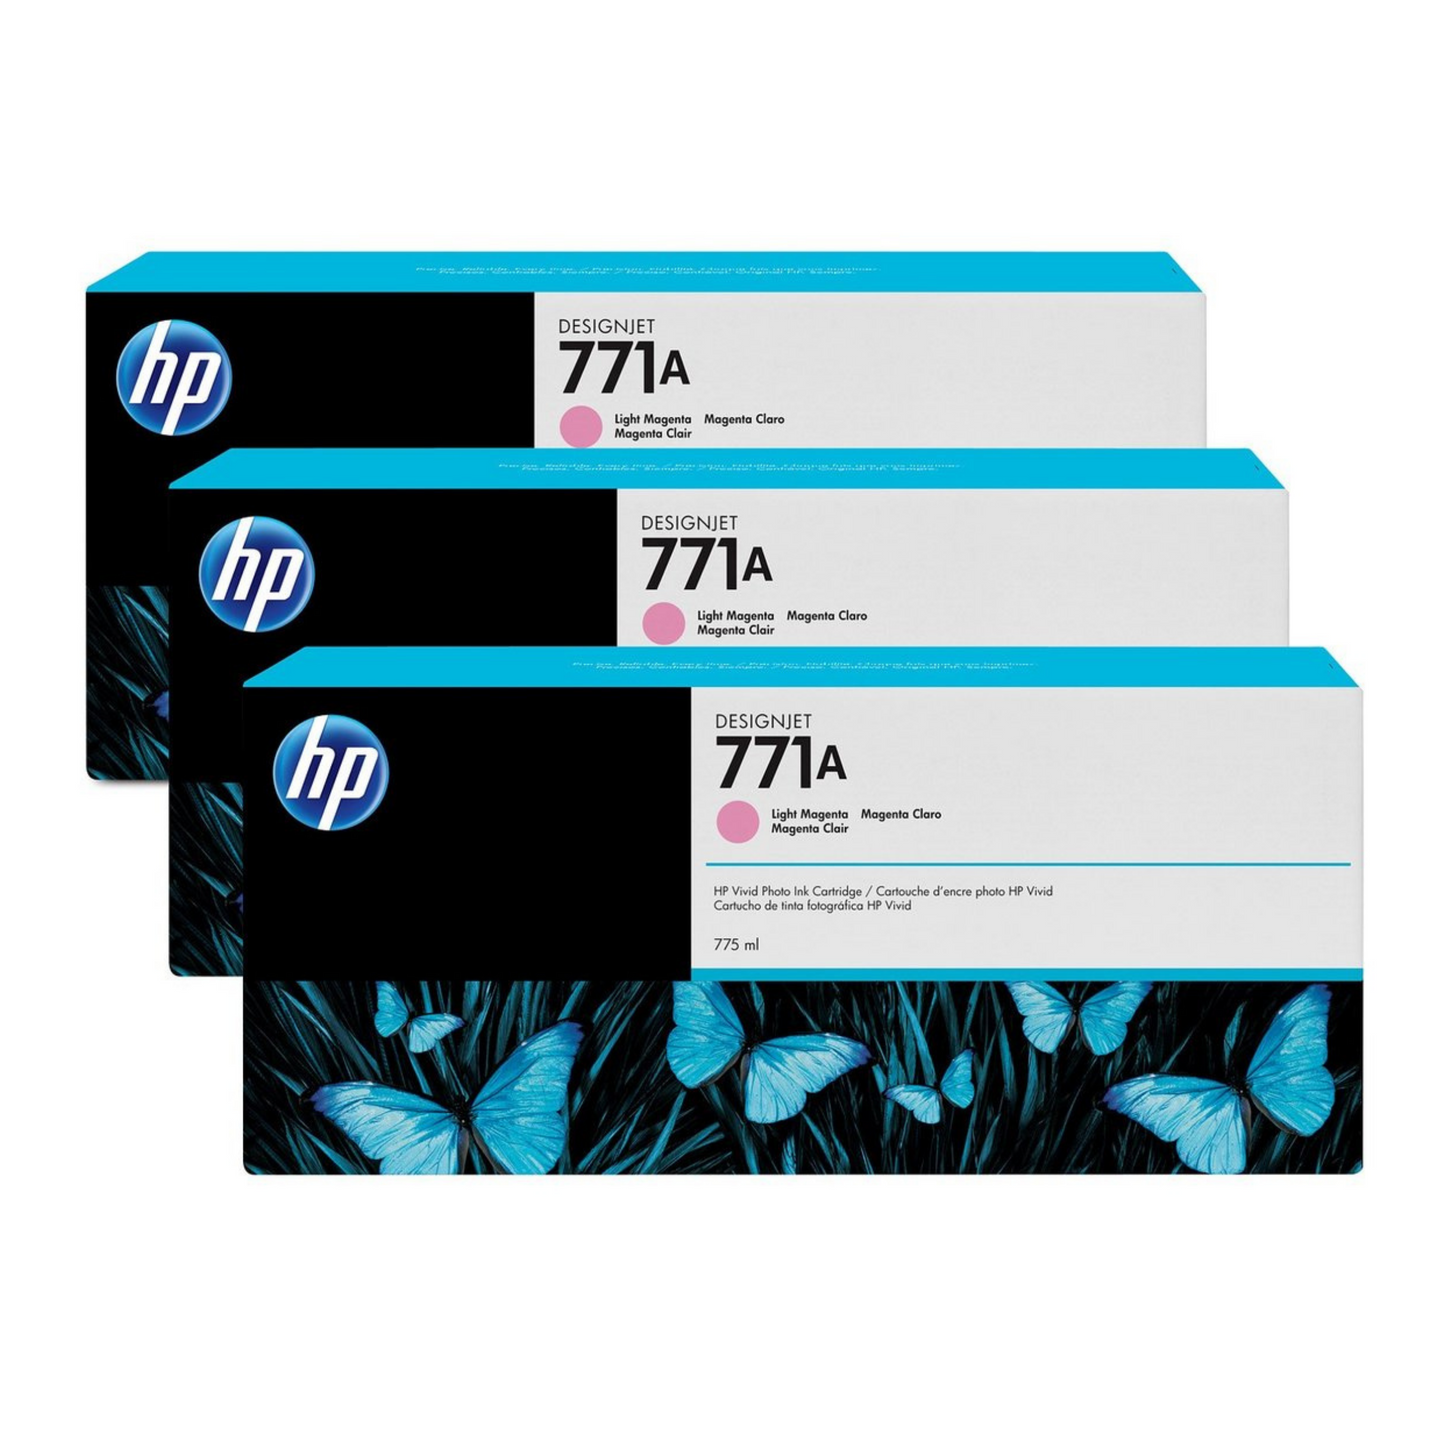 HP 771A CARTUCHO MAGENTA CLARO TRI-PACK DESIGNJET 775ML B6Y43A